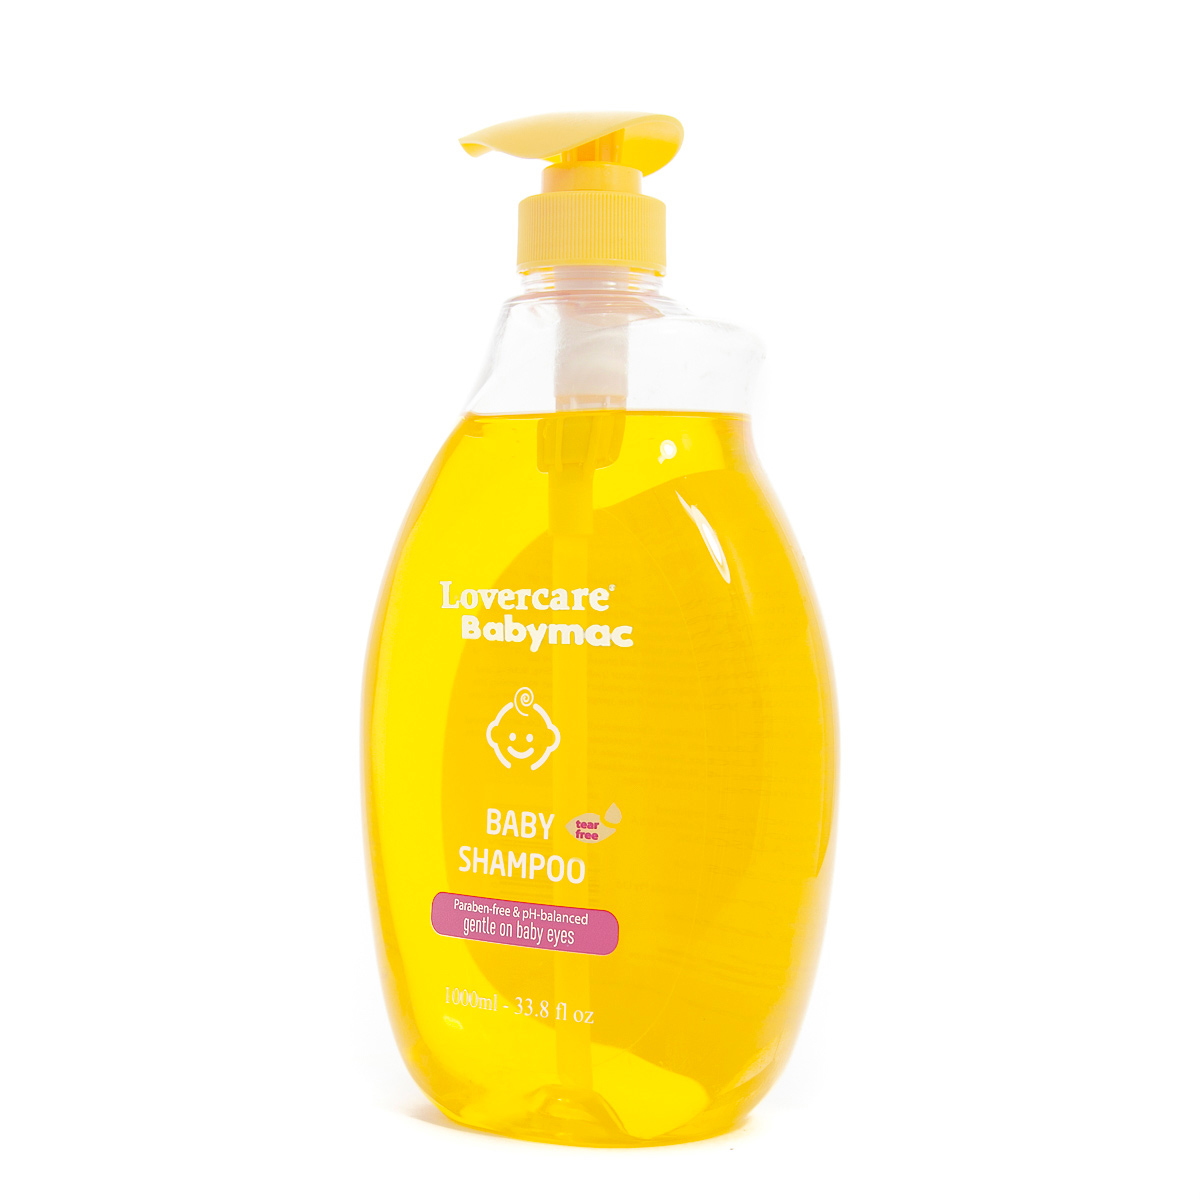 Lovercare Babymac Baby Shampoo - 1000ml - 33.8 fl oz